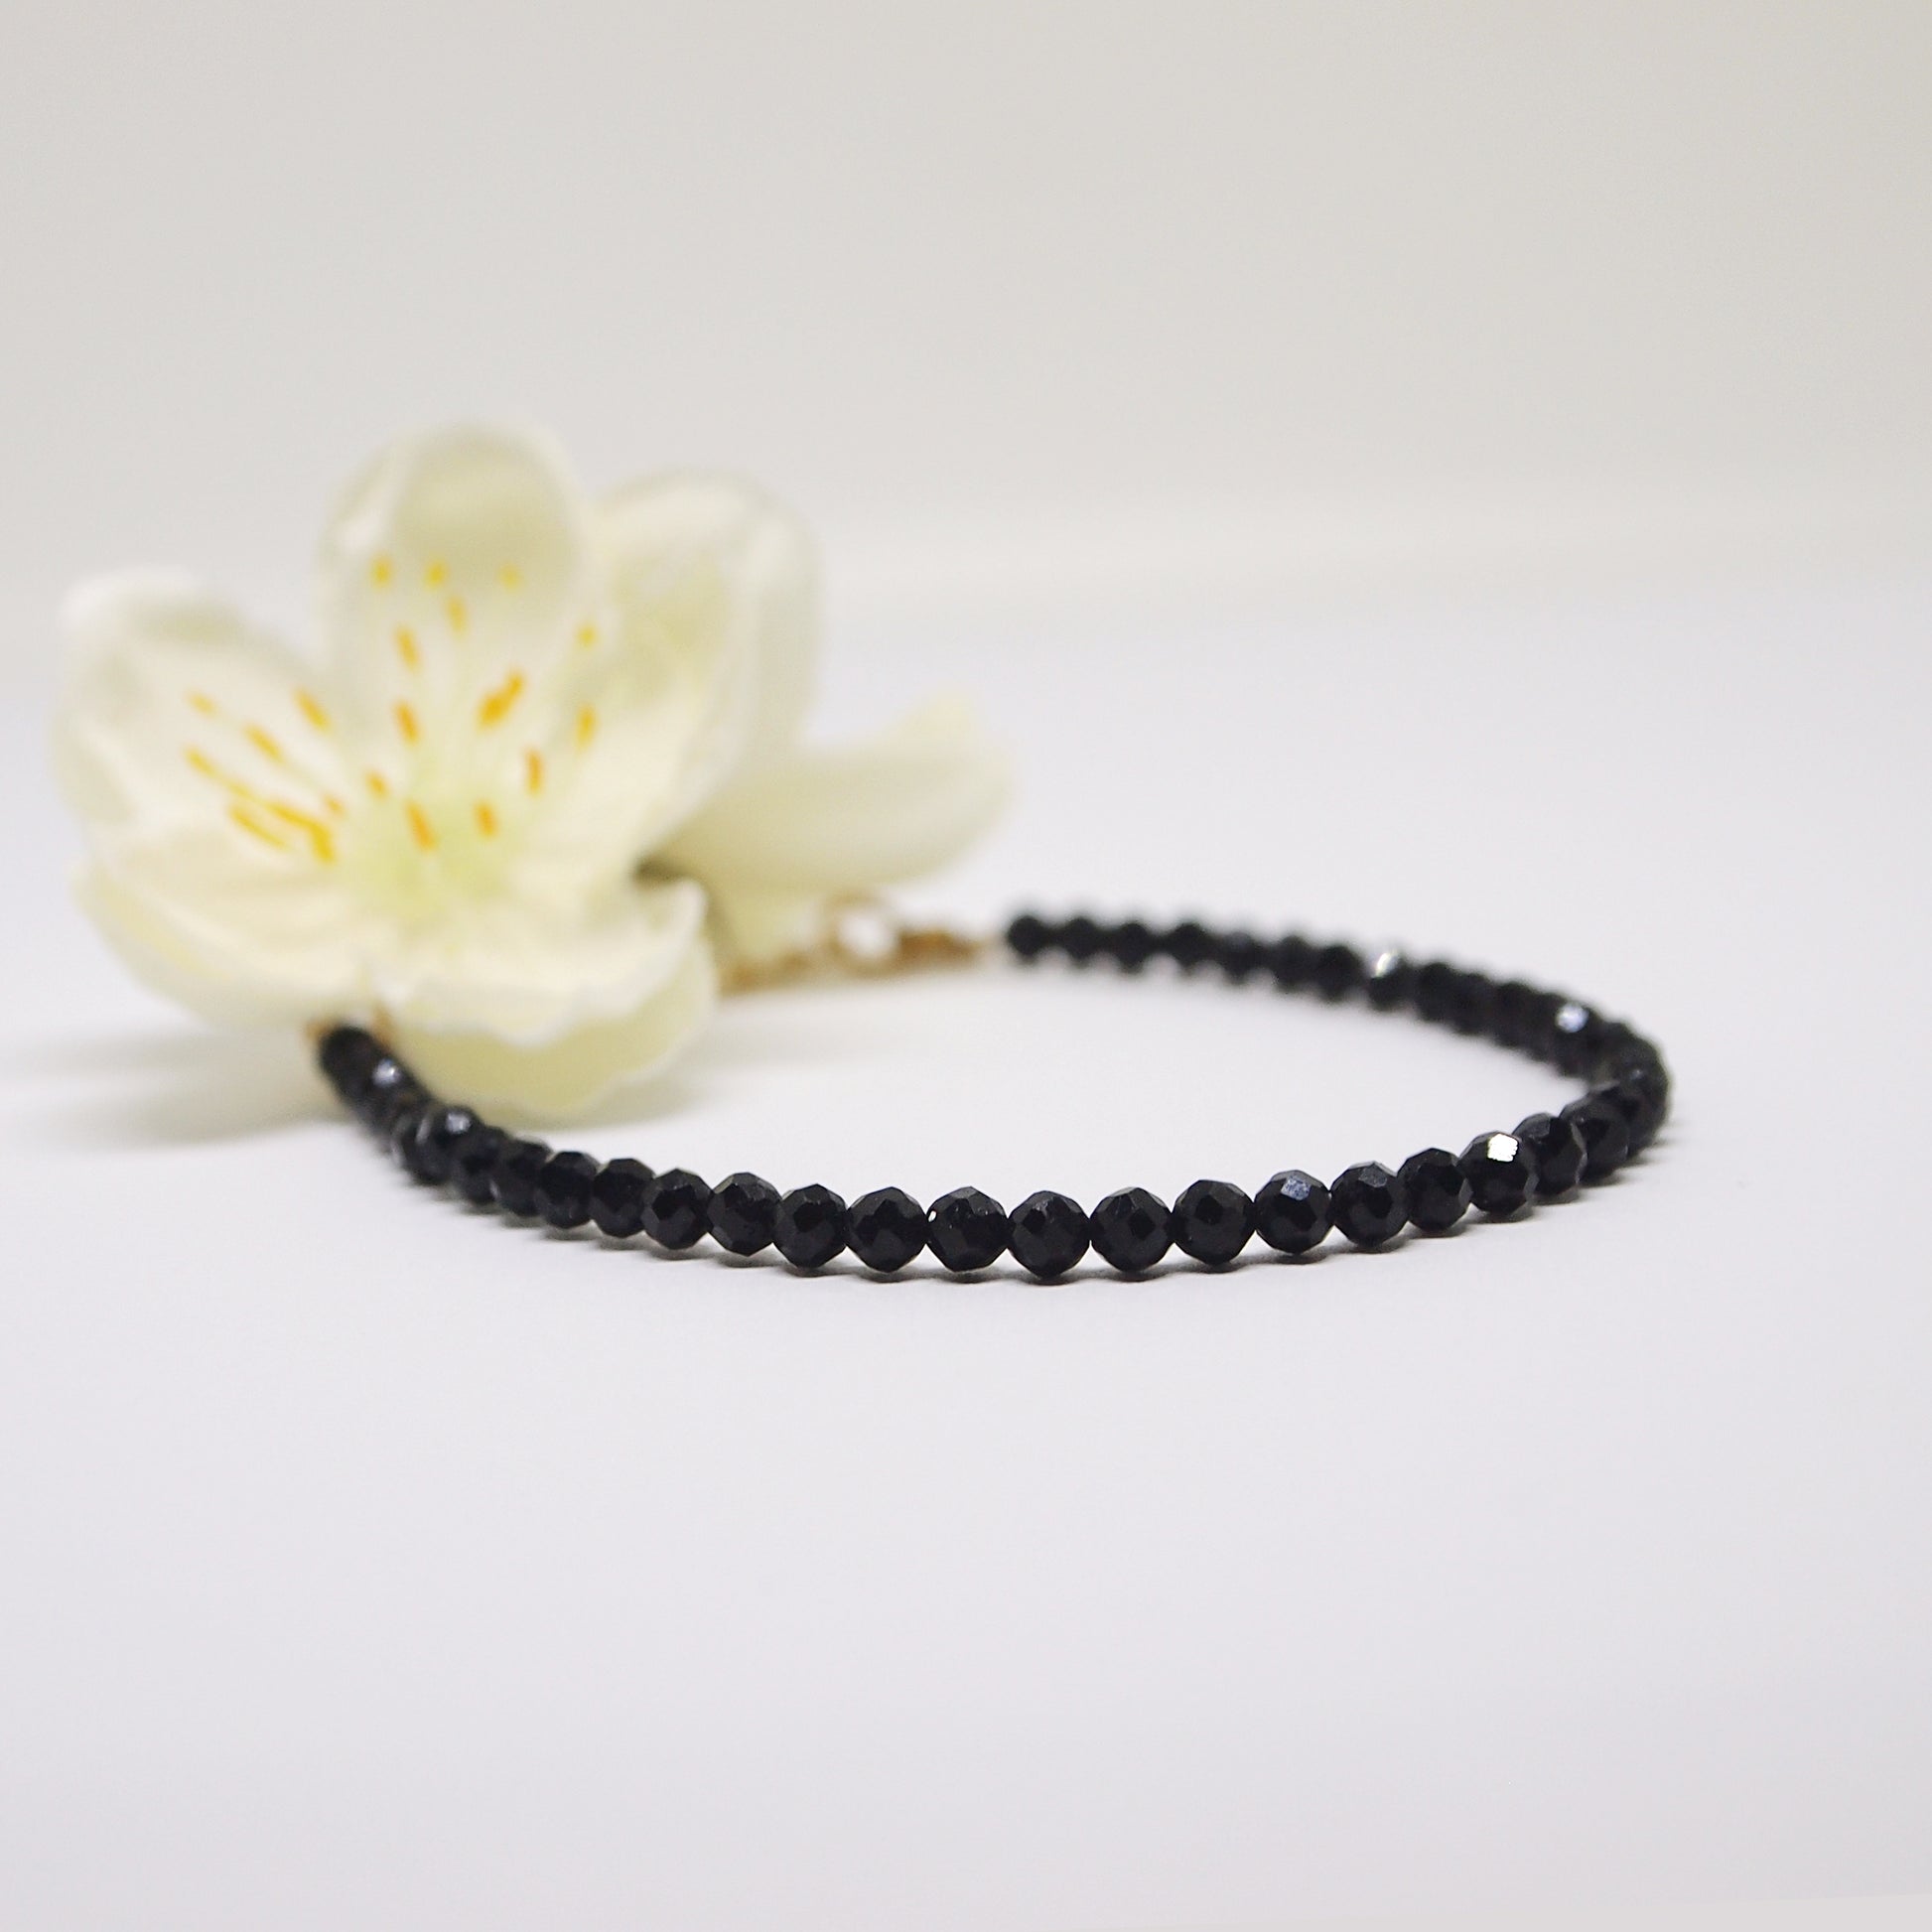 delicate beaded black tourmaline bracelet, lovely gift for a woman